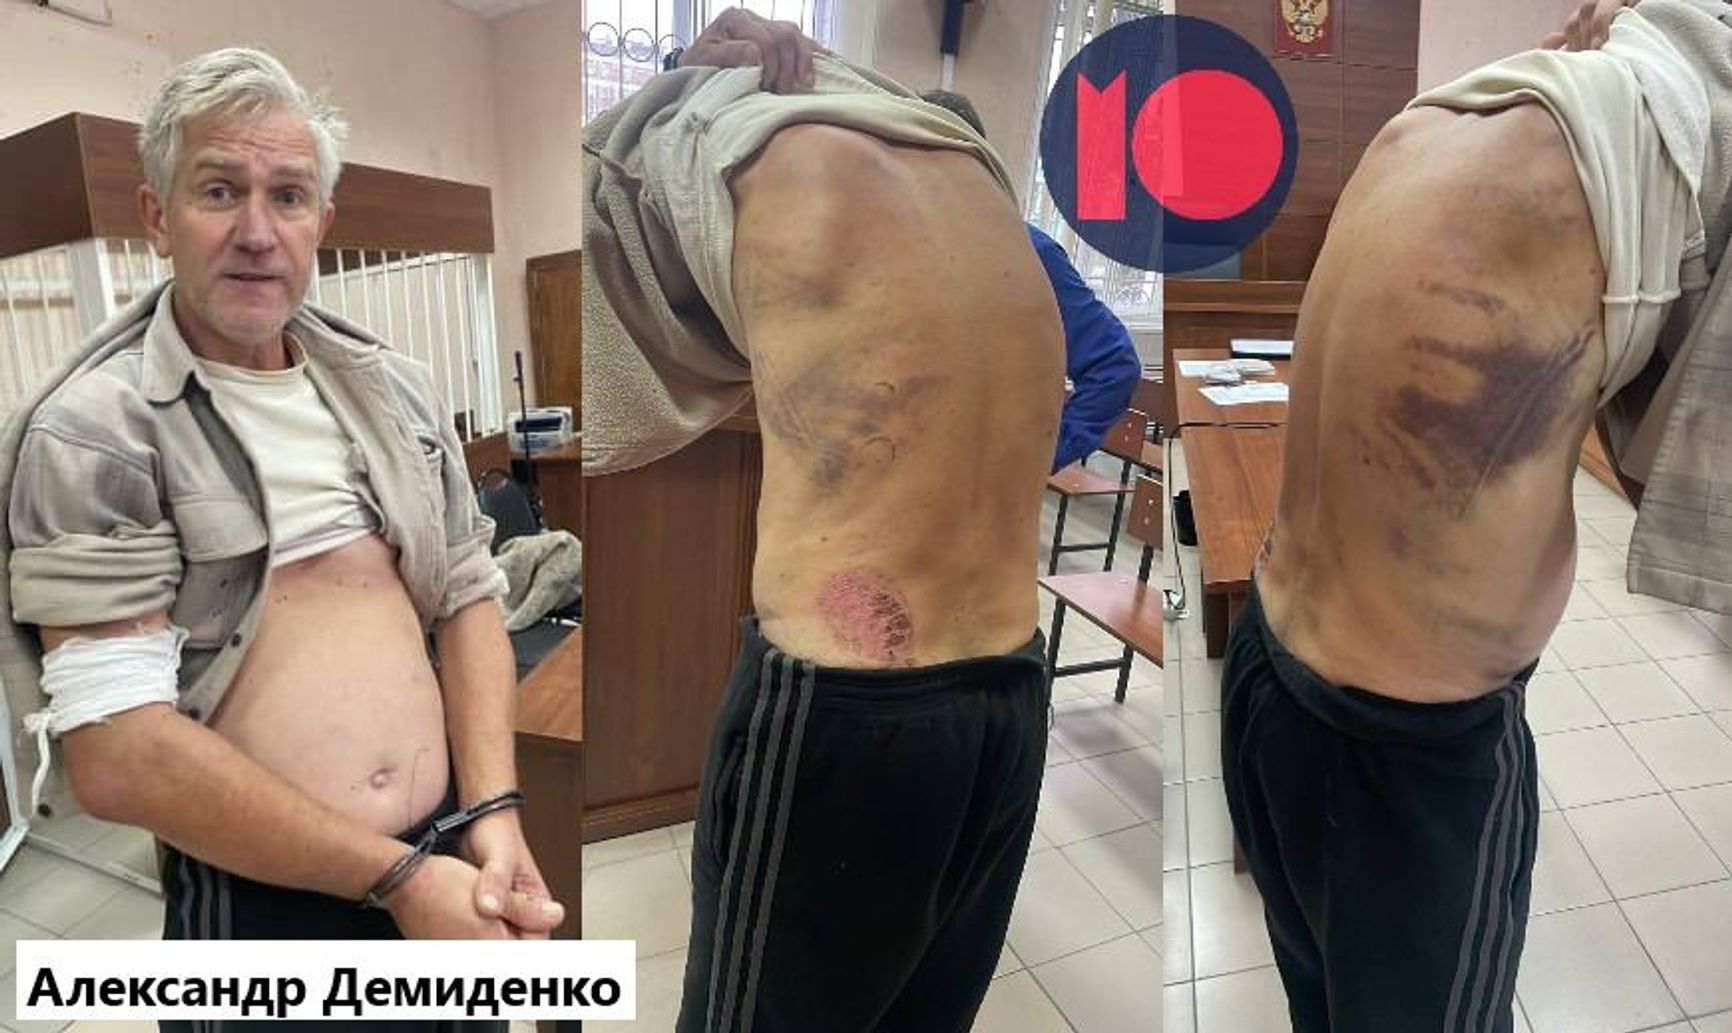 Следы избиений на теле Александра Демиденко 